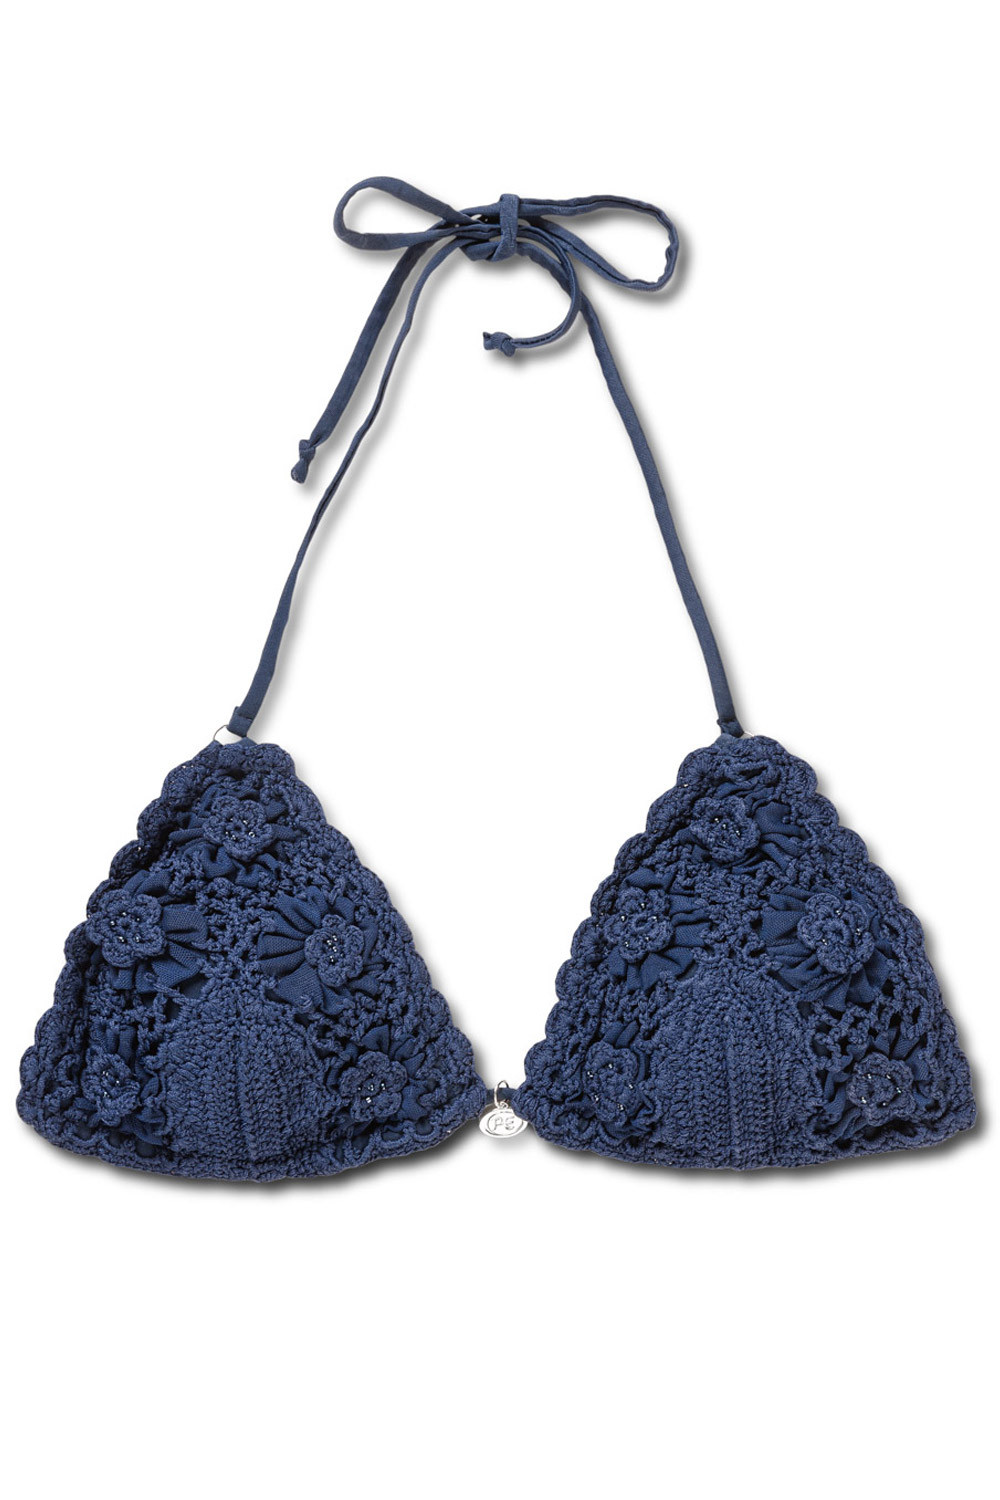 Panos Emporio Kandia Crochet Bikini Top Navy Blue